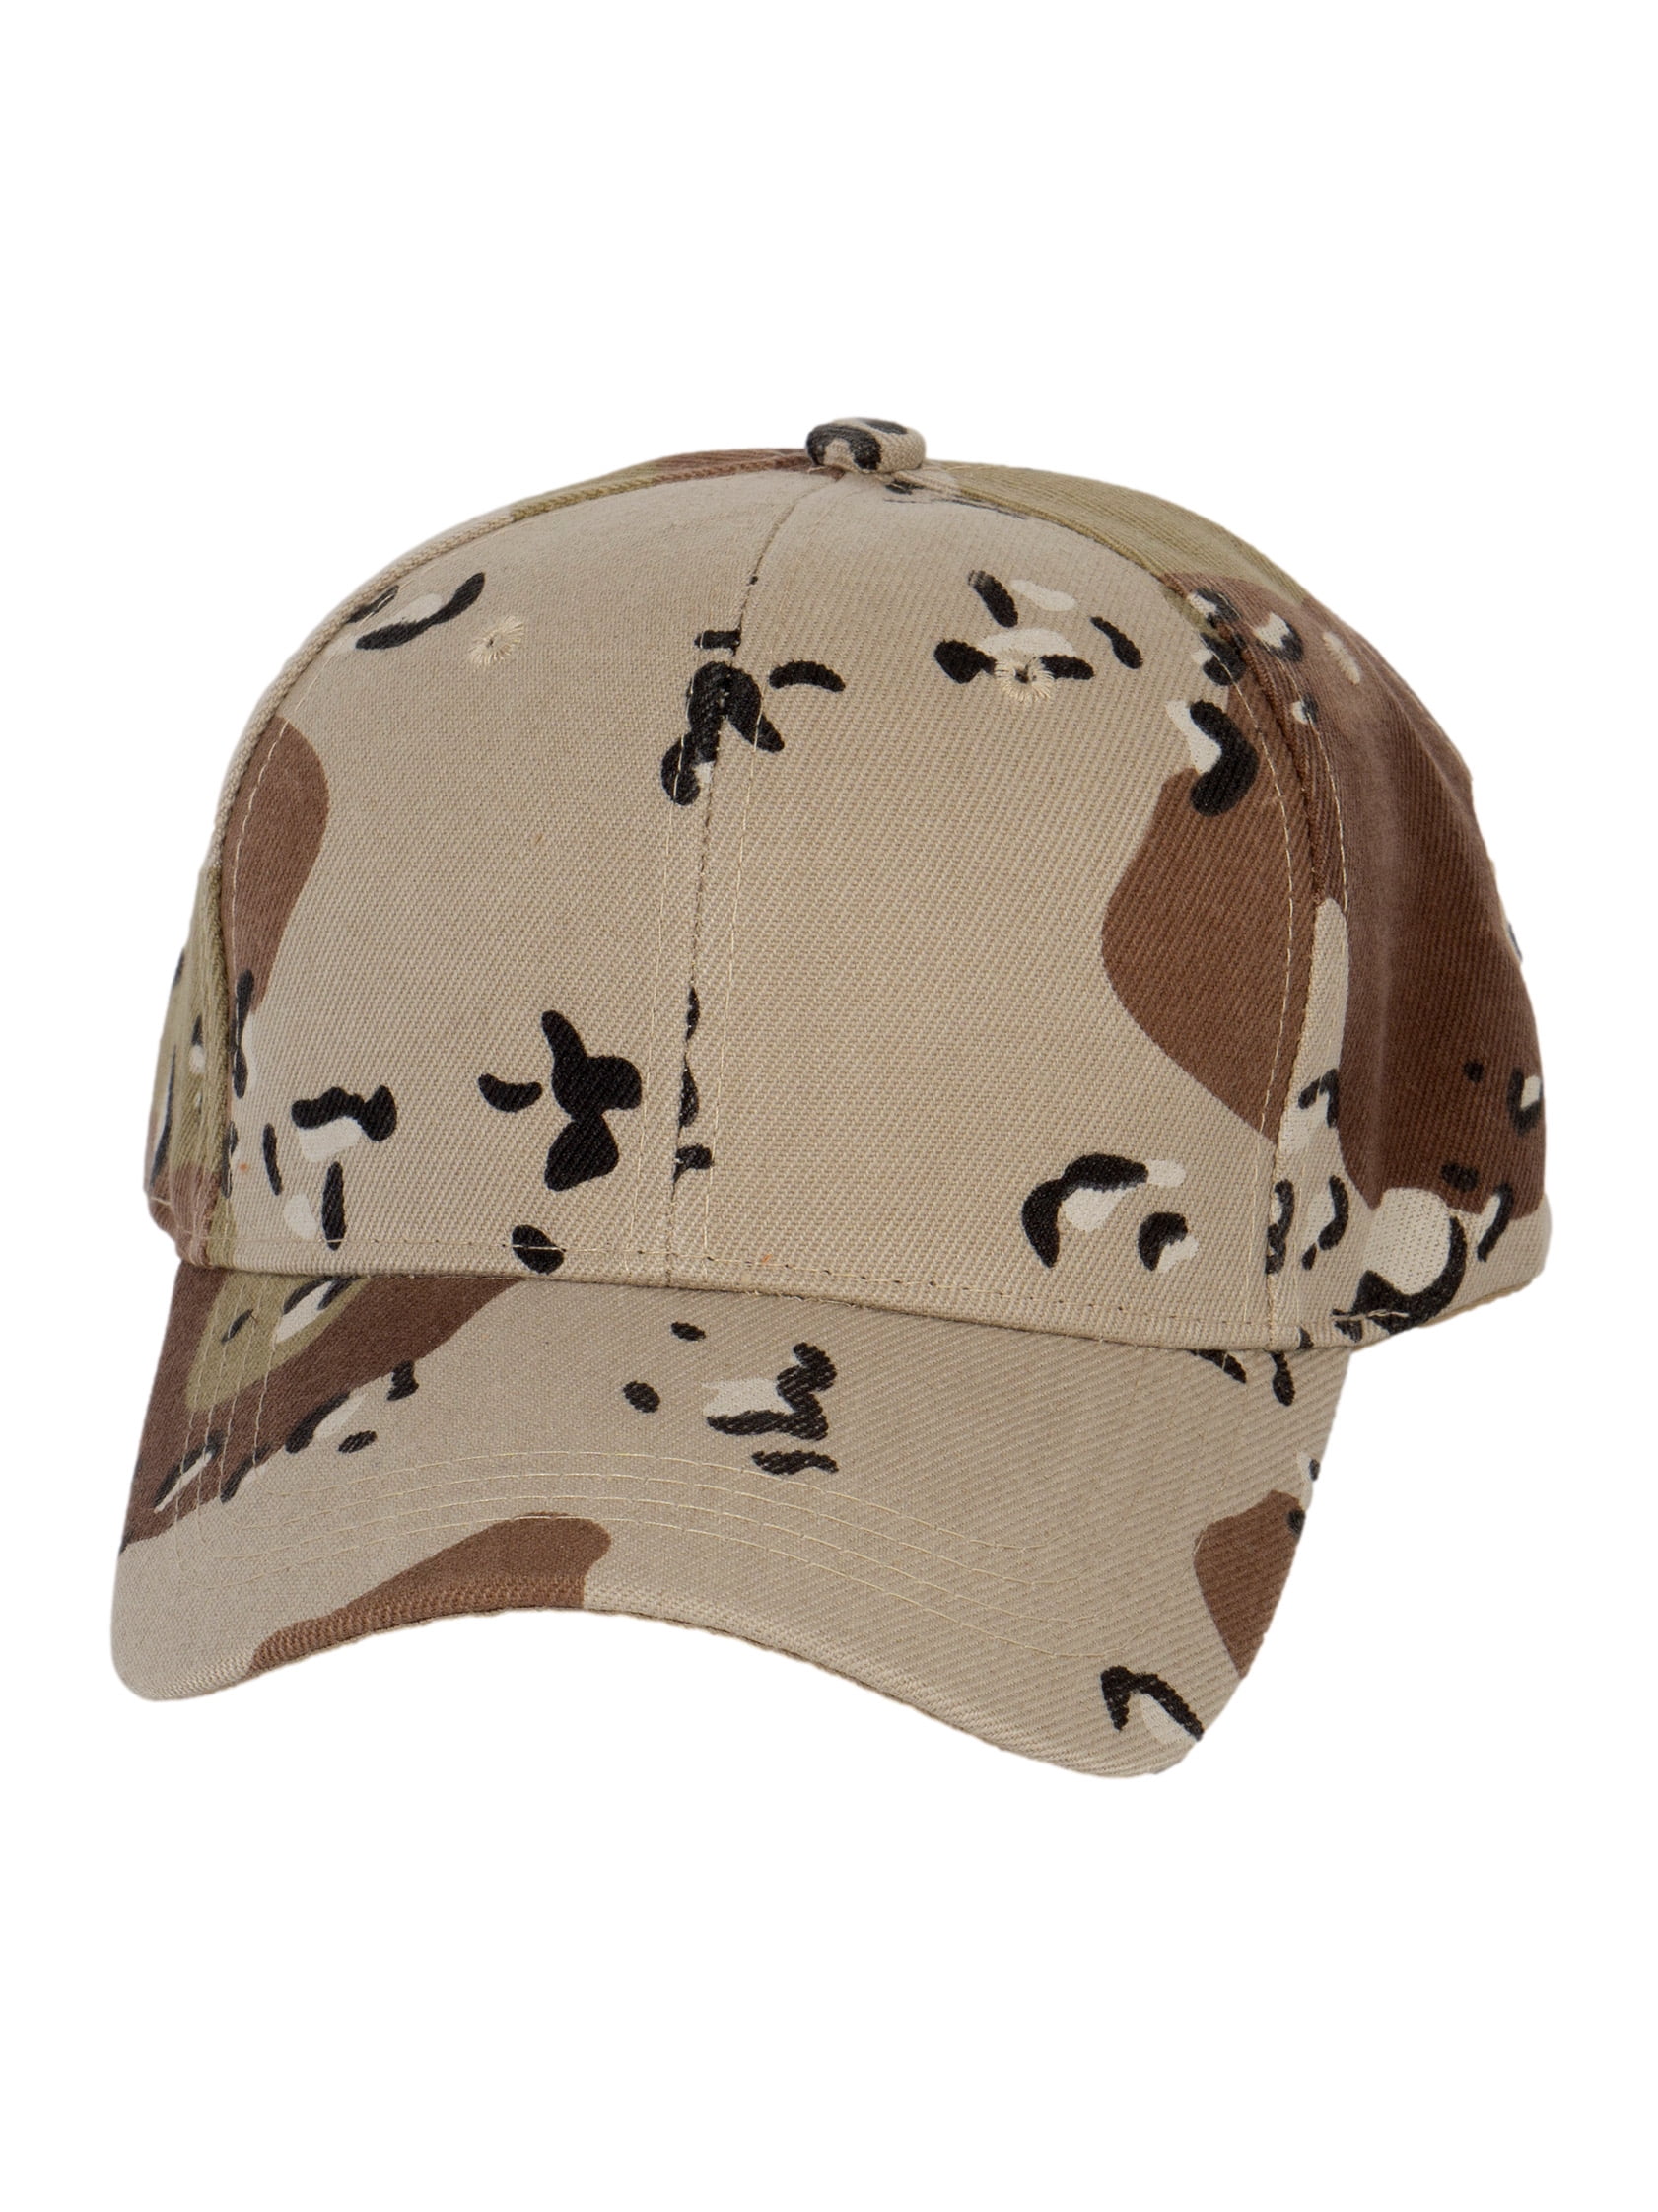 Mens Camouflage Military Adjustable Hat Camo Hunting Fishing Army Baseball  Cap 